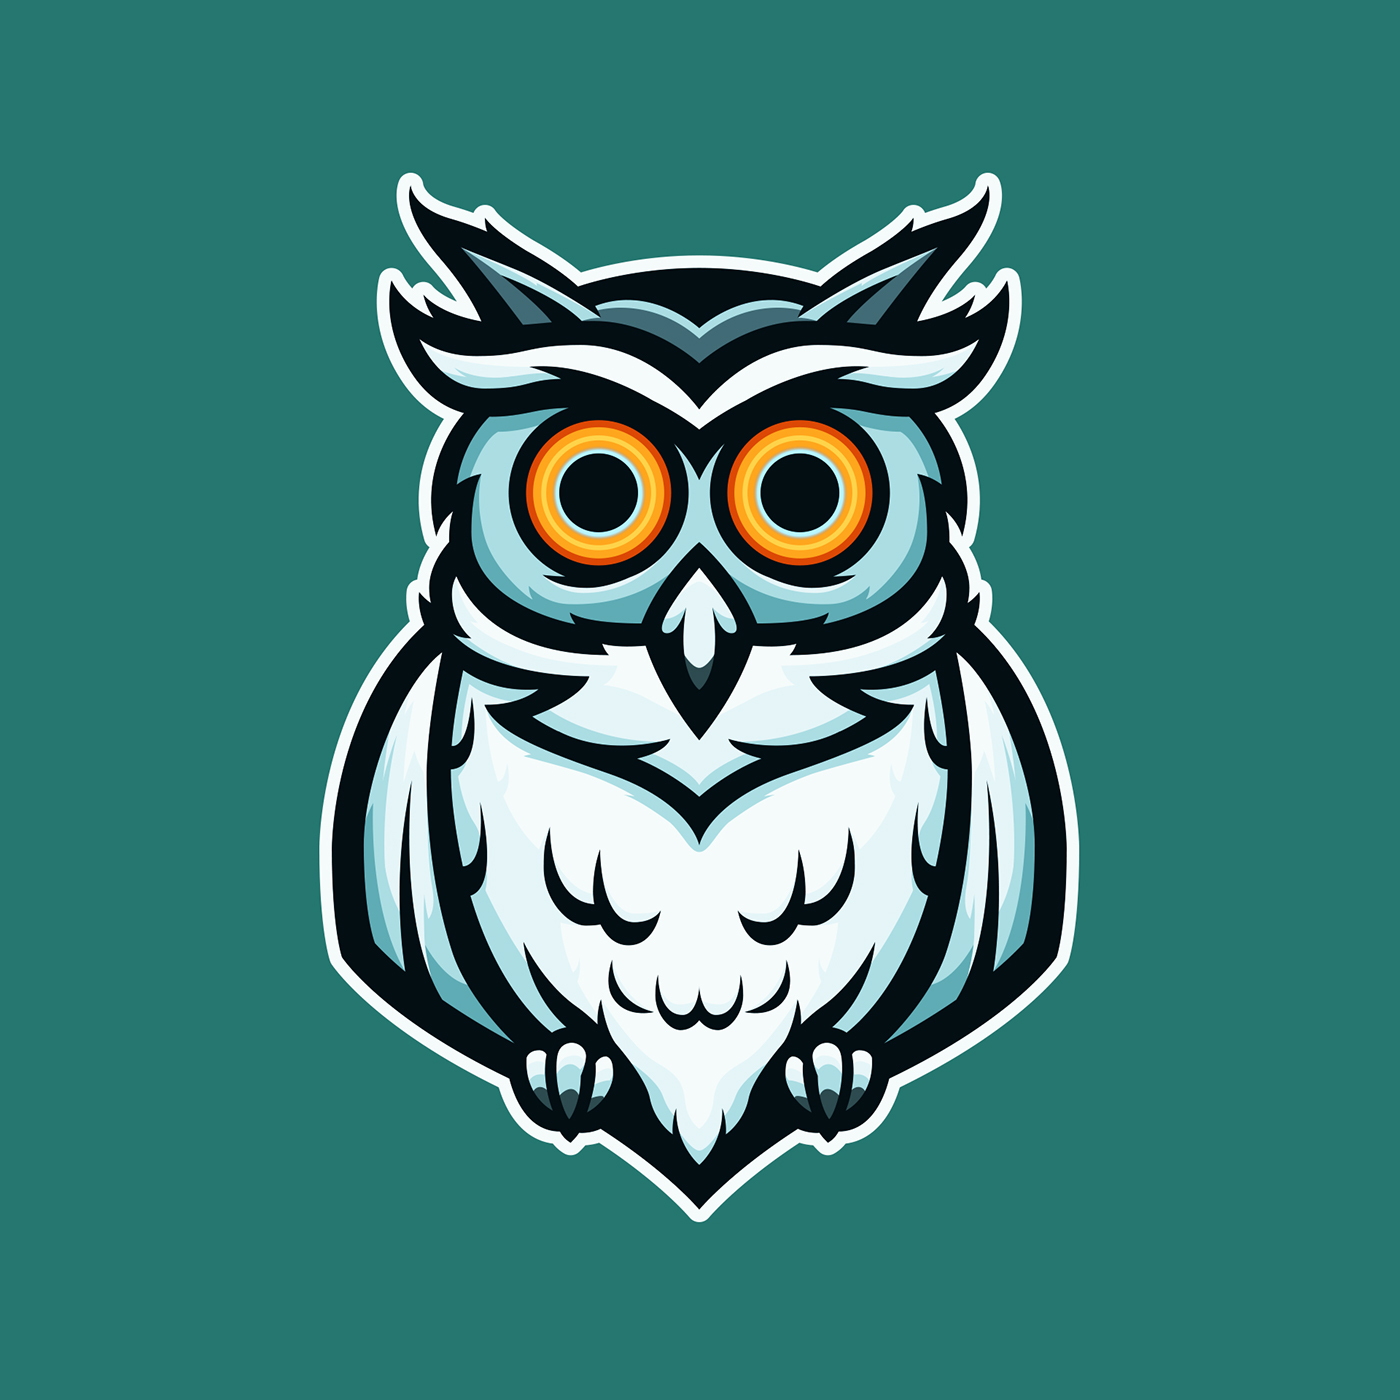 Owl Mascot Logo / Illustration : Illustration.